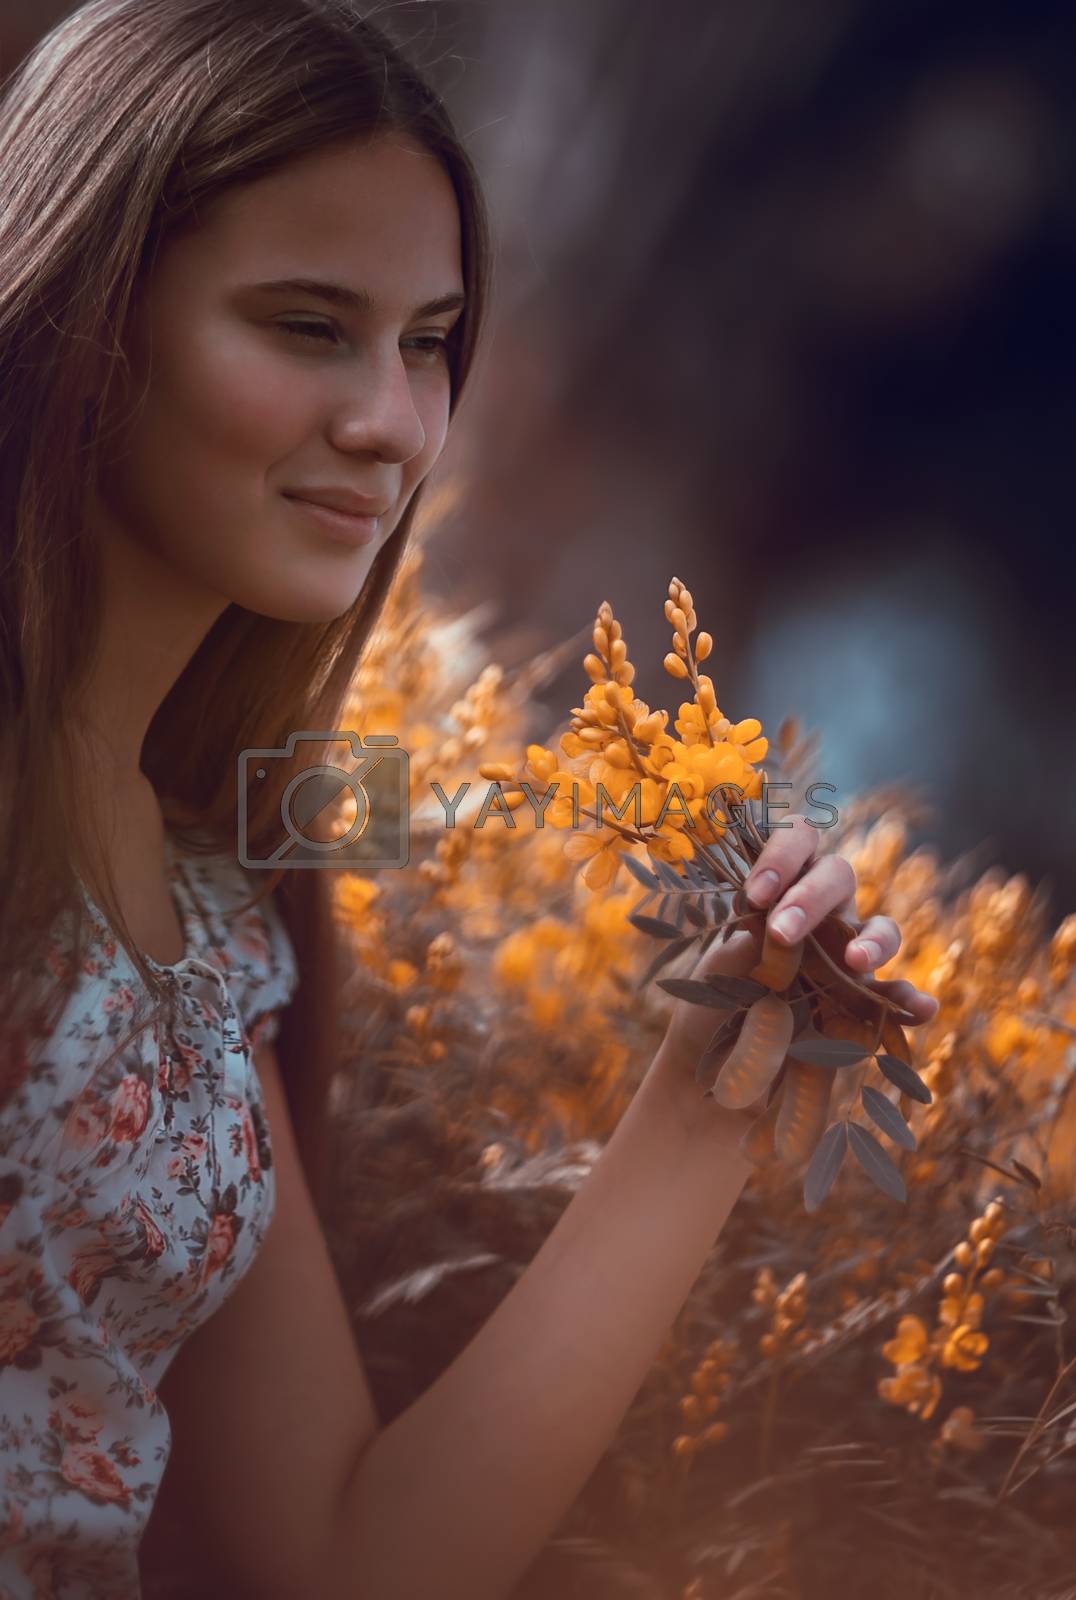 Royalty free image of Pretty girl enjoying wildflowers by Anna_Omelchenko